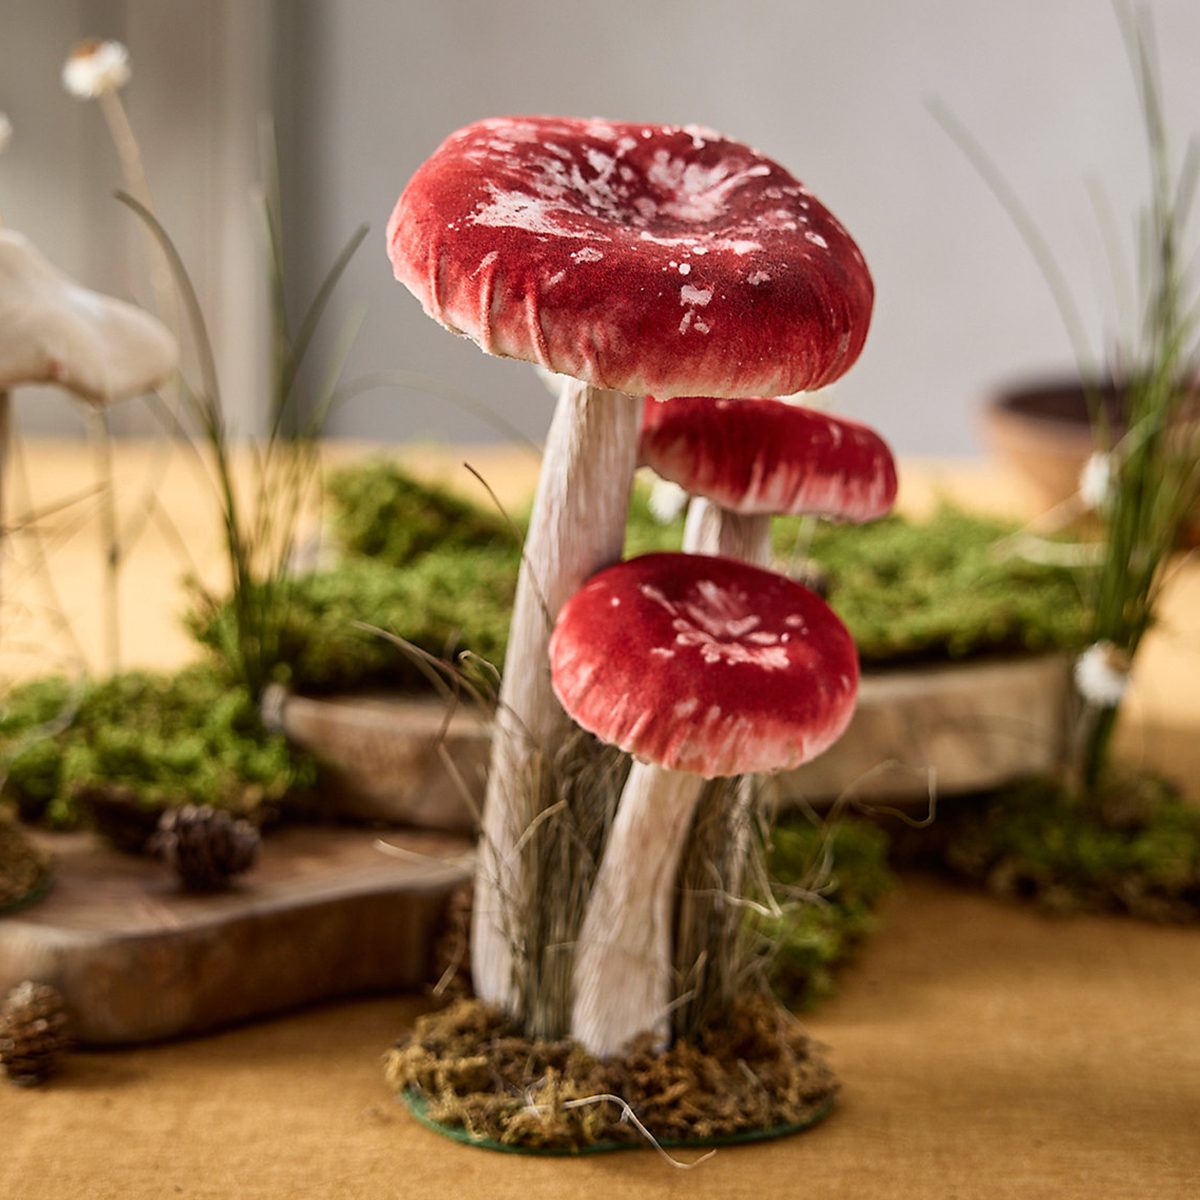 Funky Fungi 70s Mushroom Kitchen Towel Set